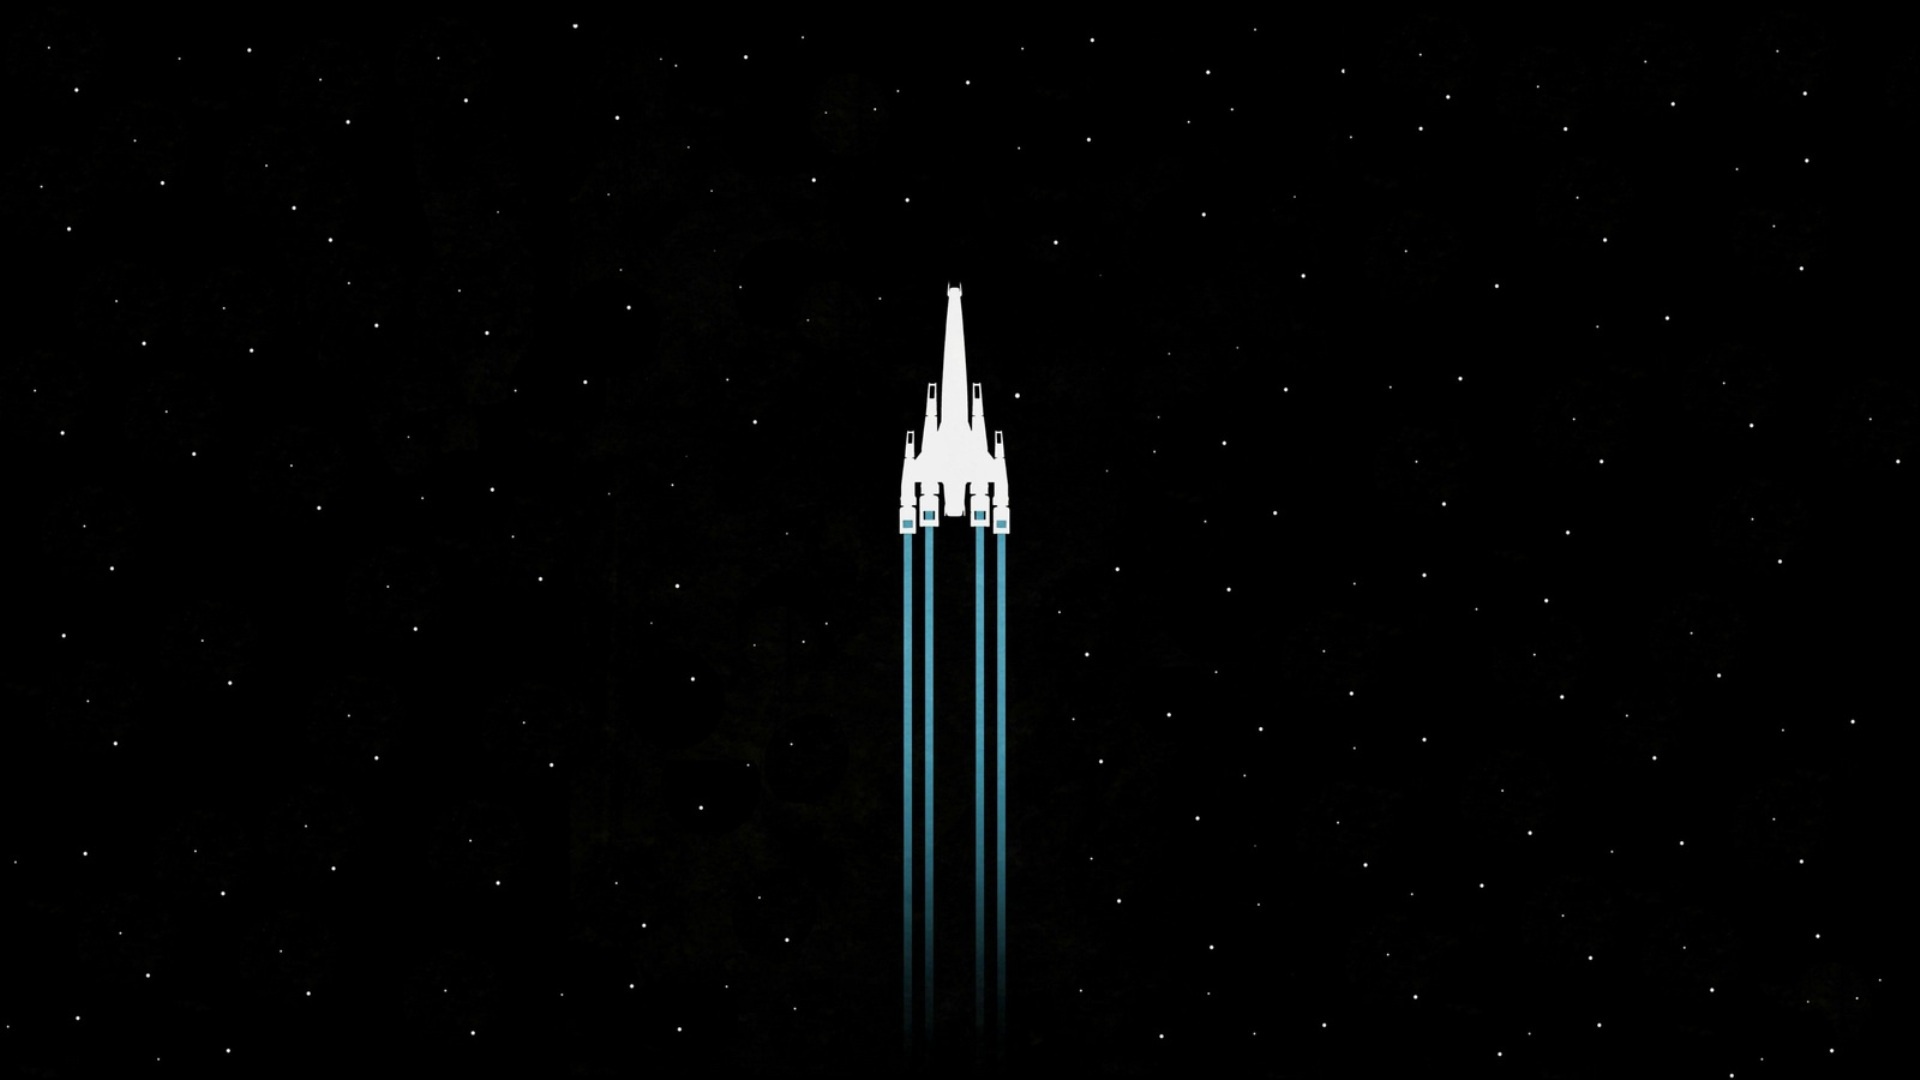 Artwork Spaceship Stars Science Fiction Vehicle Mass Effect N7 1920x1080